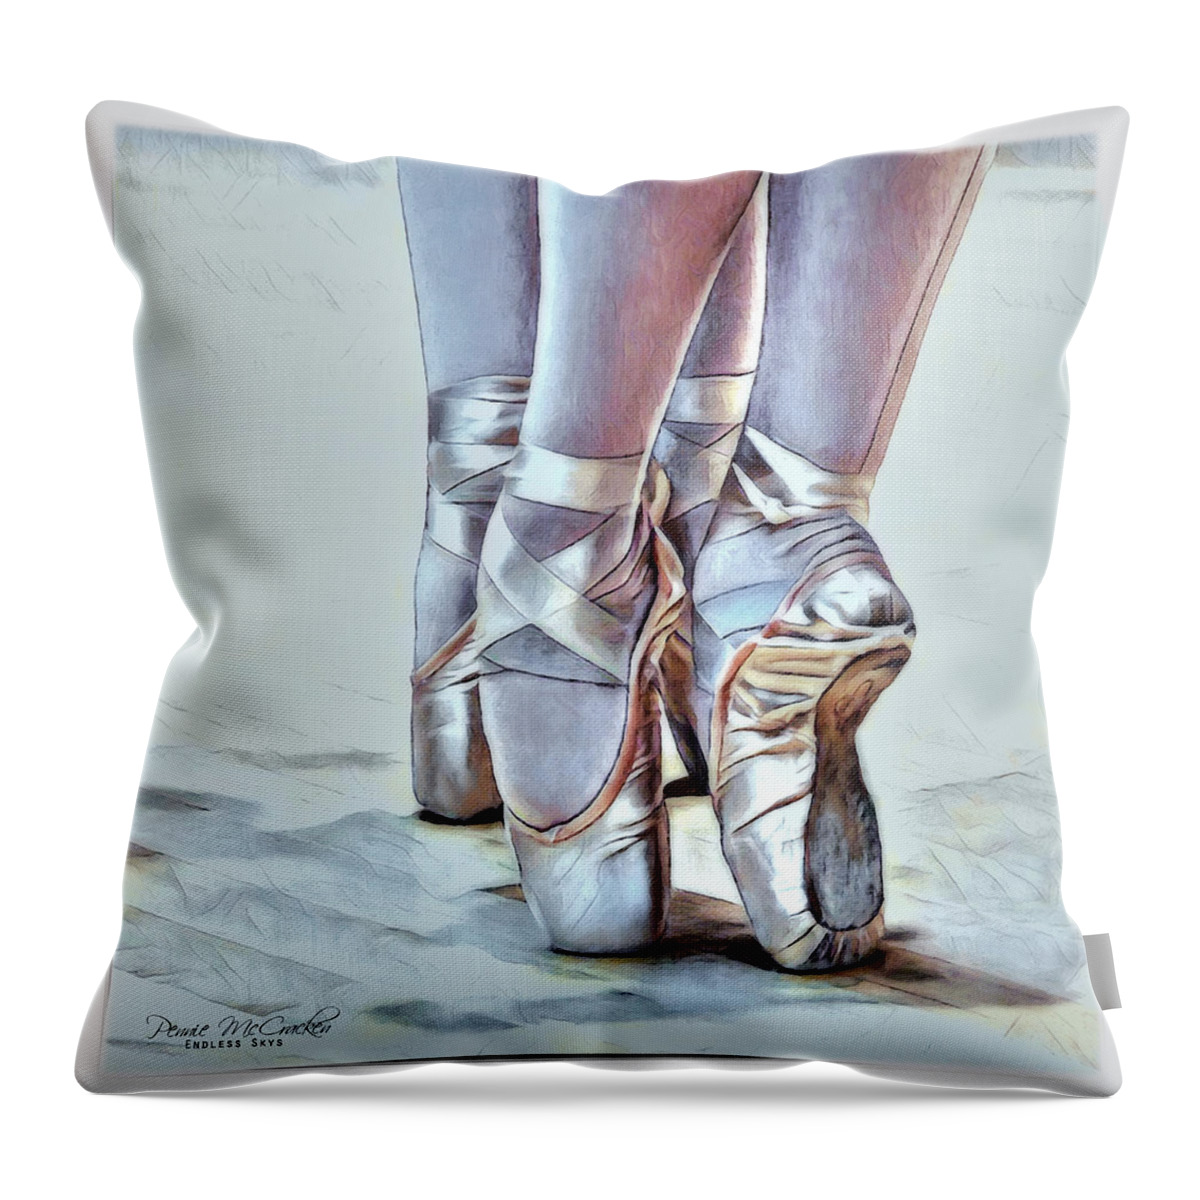 Ballet Throw Pillow featuring the digital art Dancing Shoes by Pennie McCracken